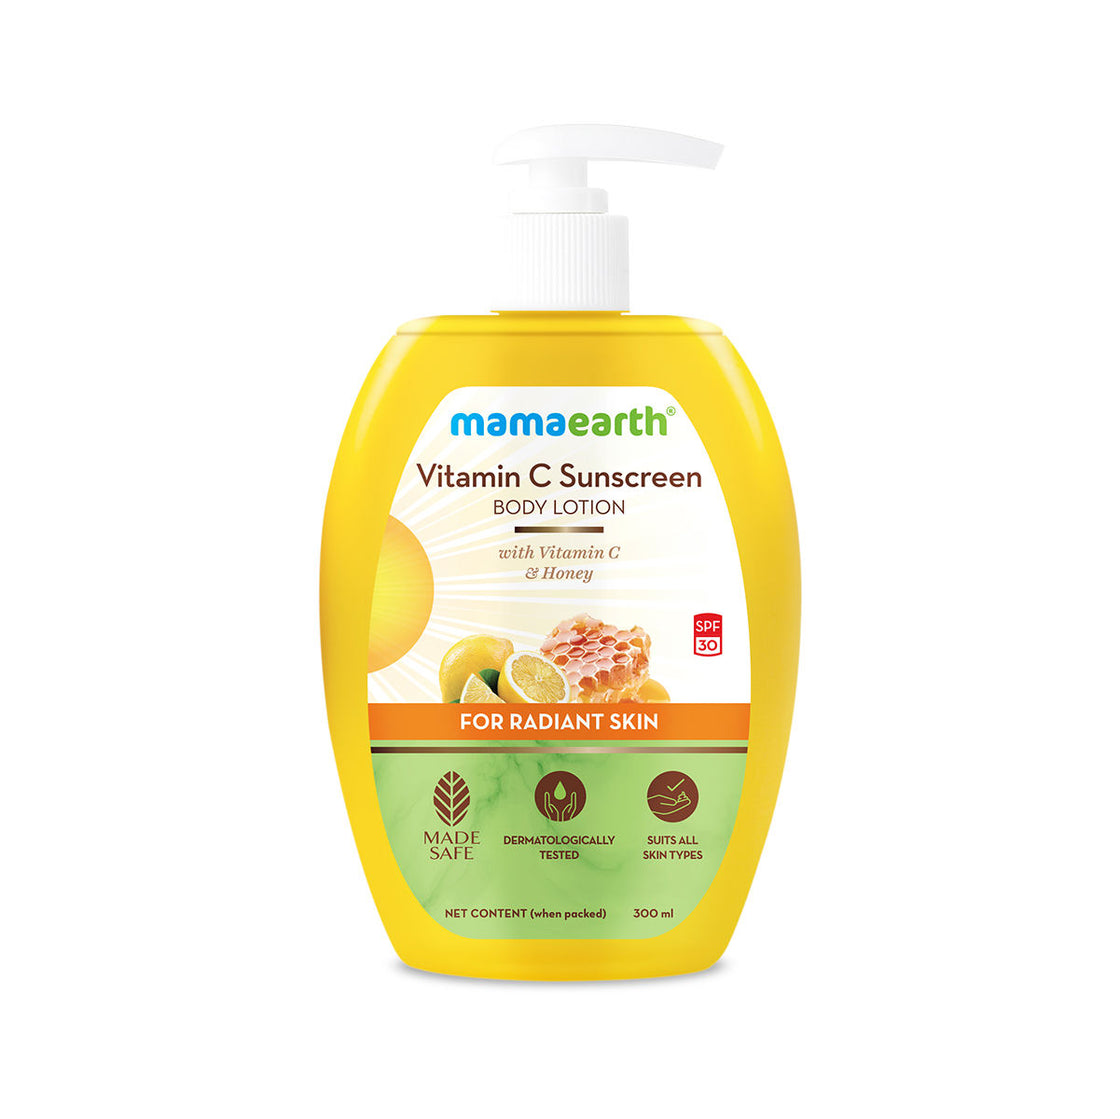 Mamaearth Vitamin C Sunscreen Body Lotion Spf 30 With Vitamin C & Honey For Radiant Skin-6